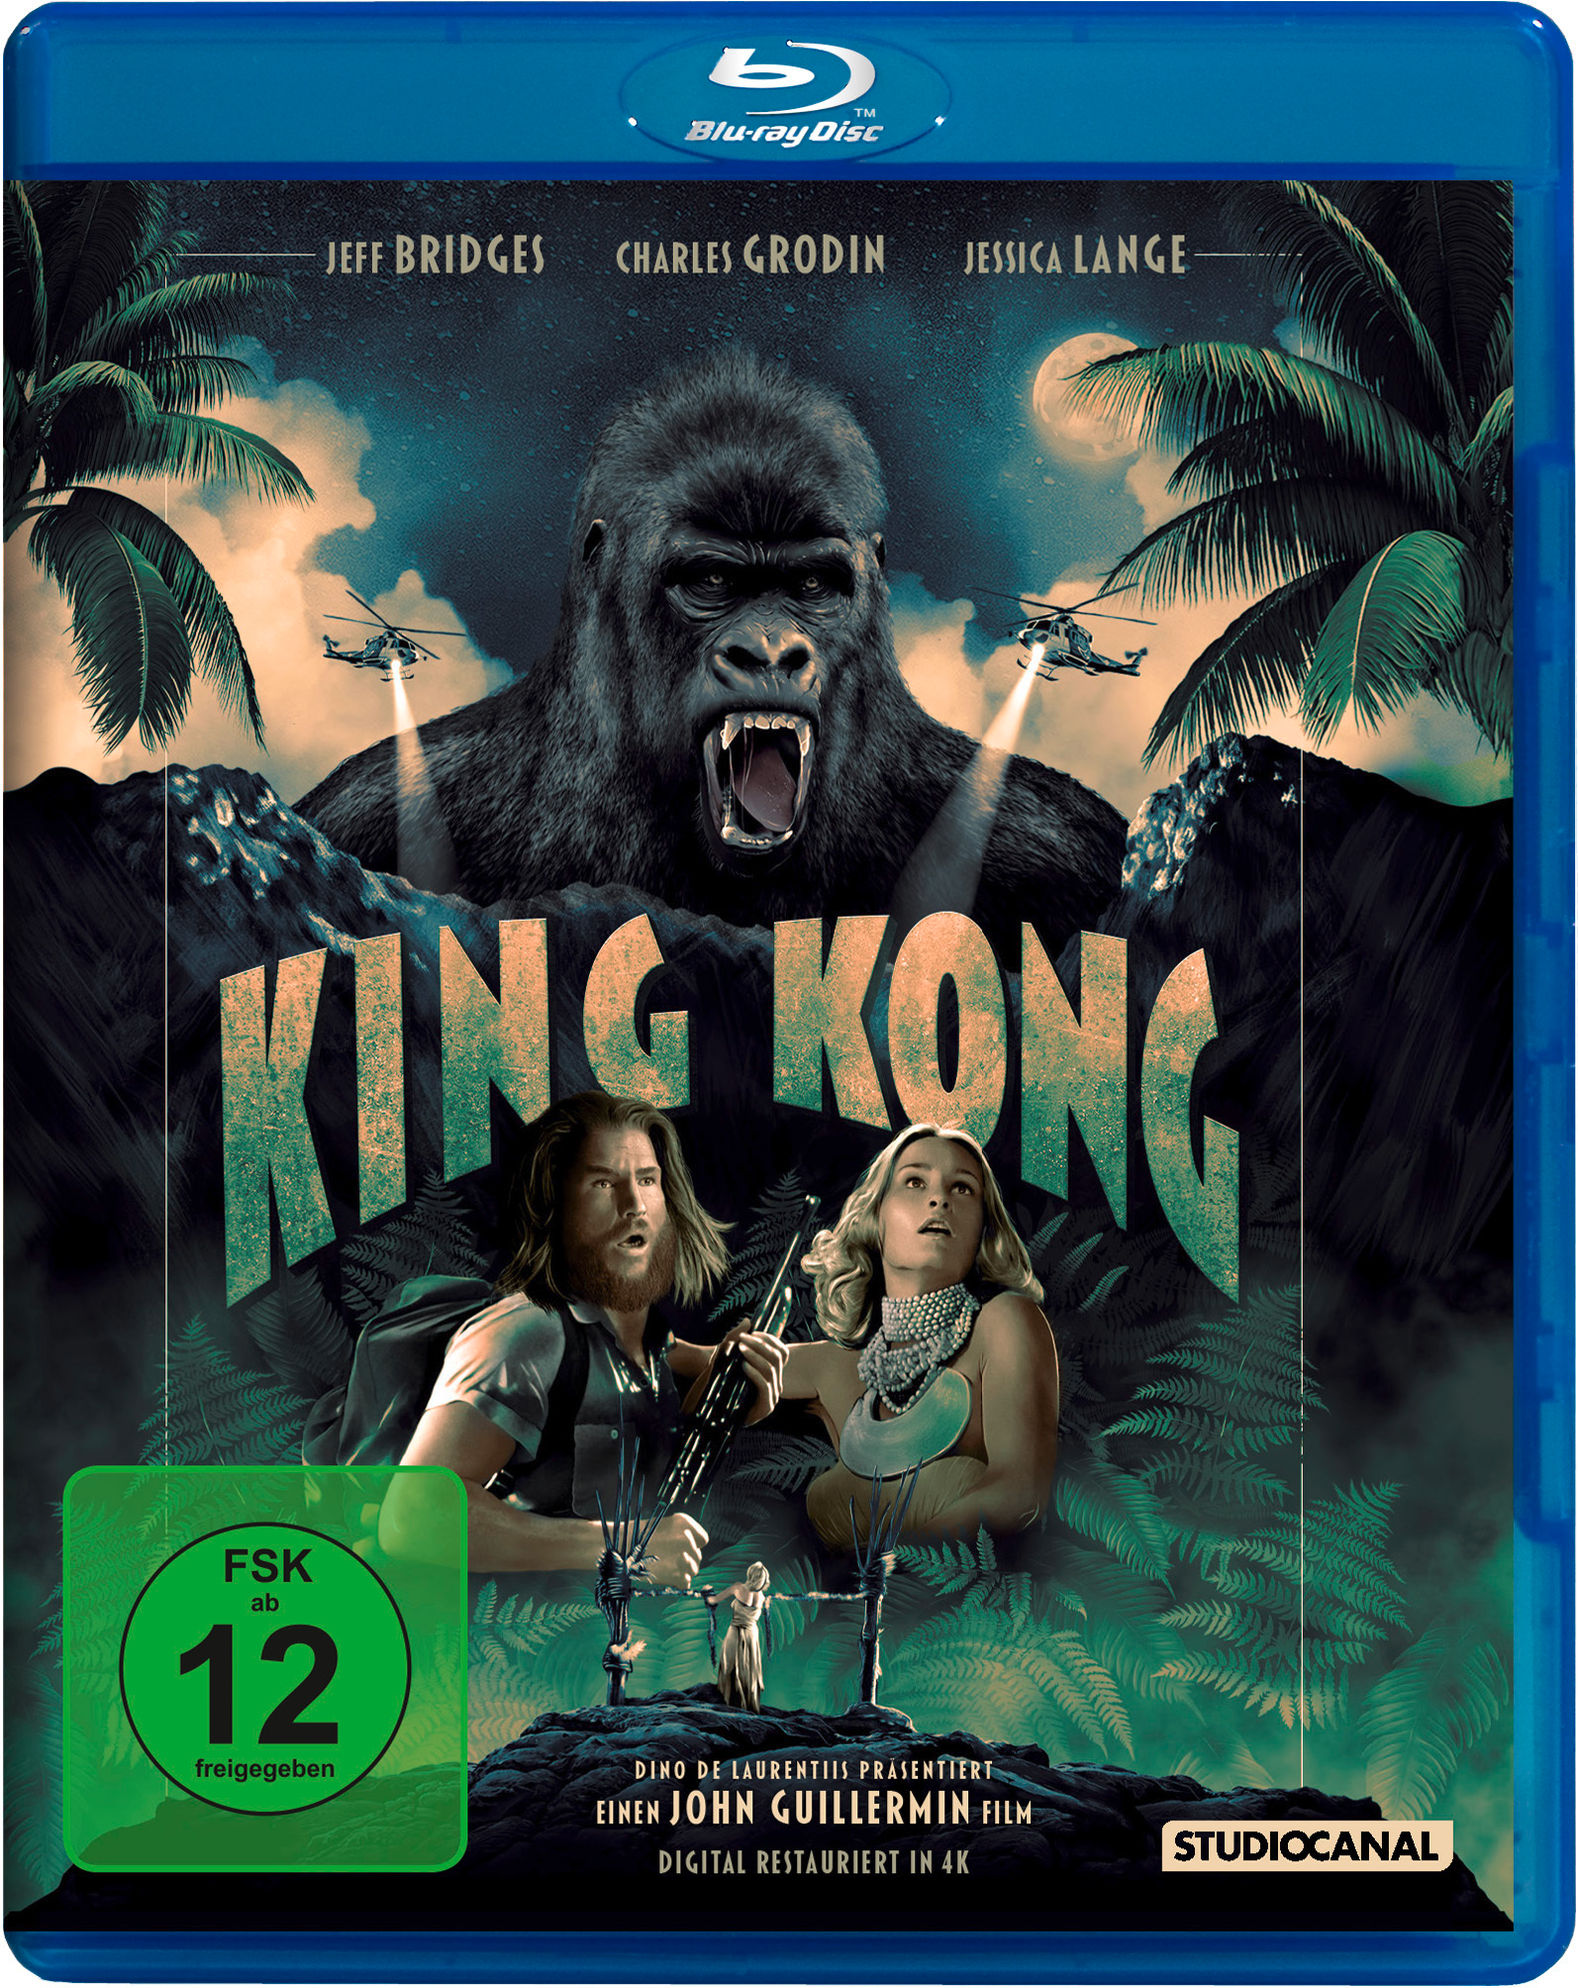 King Kong 1976 Blu-ray jetzt im Weltbild.at Shop bestellen